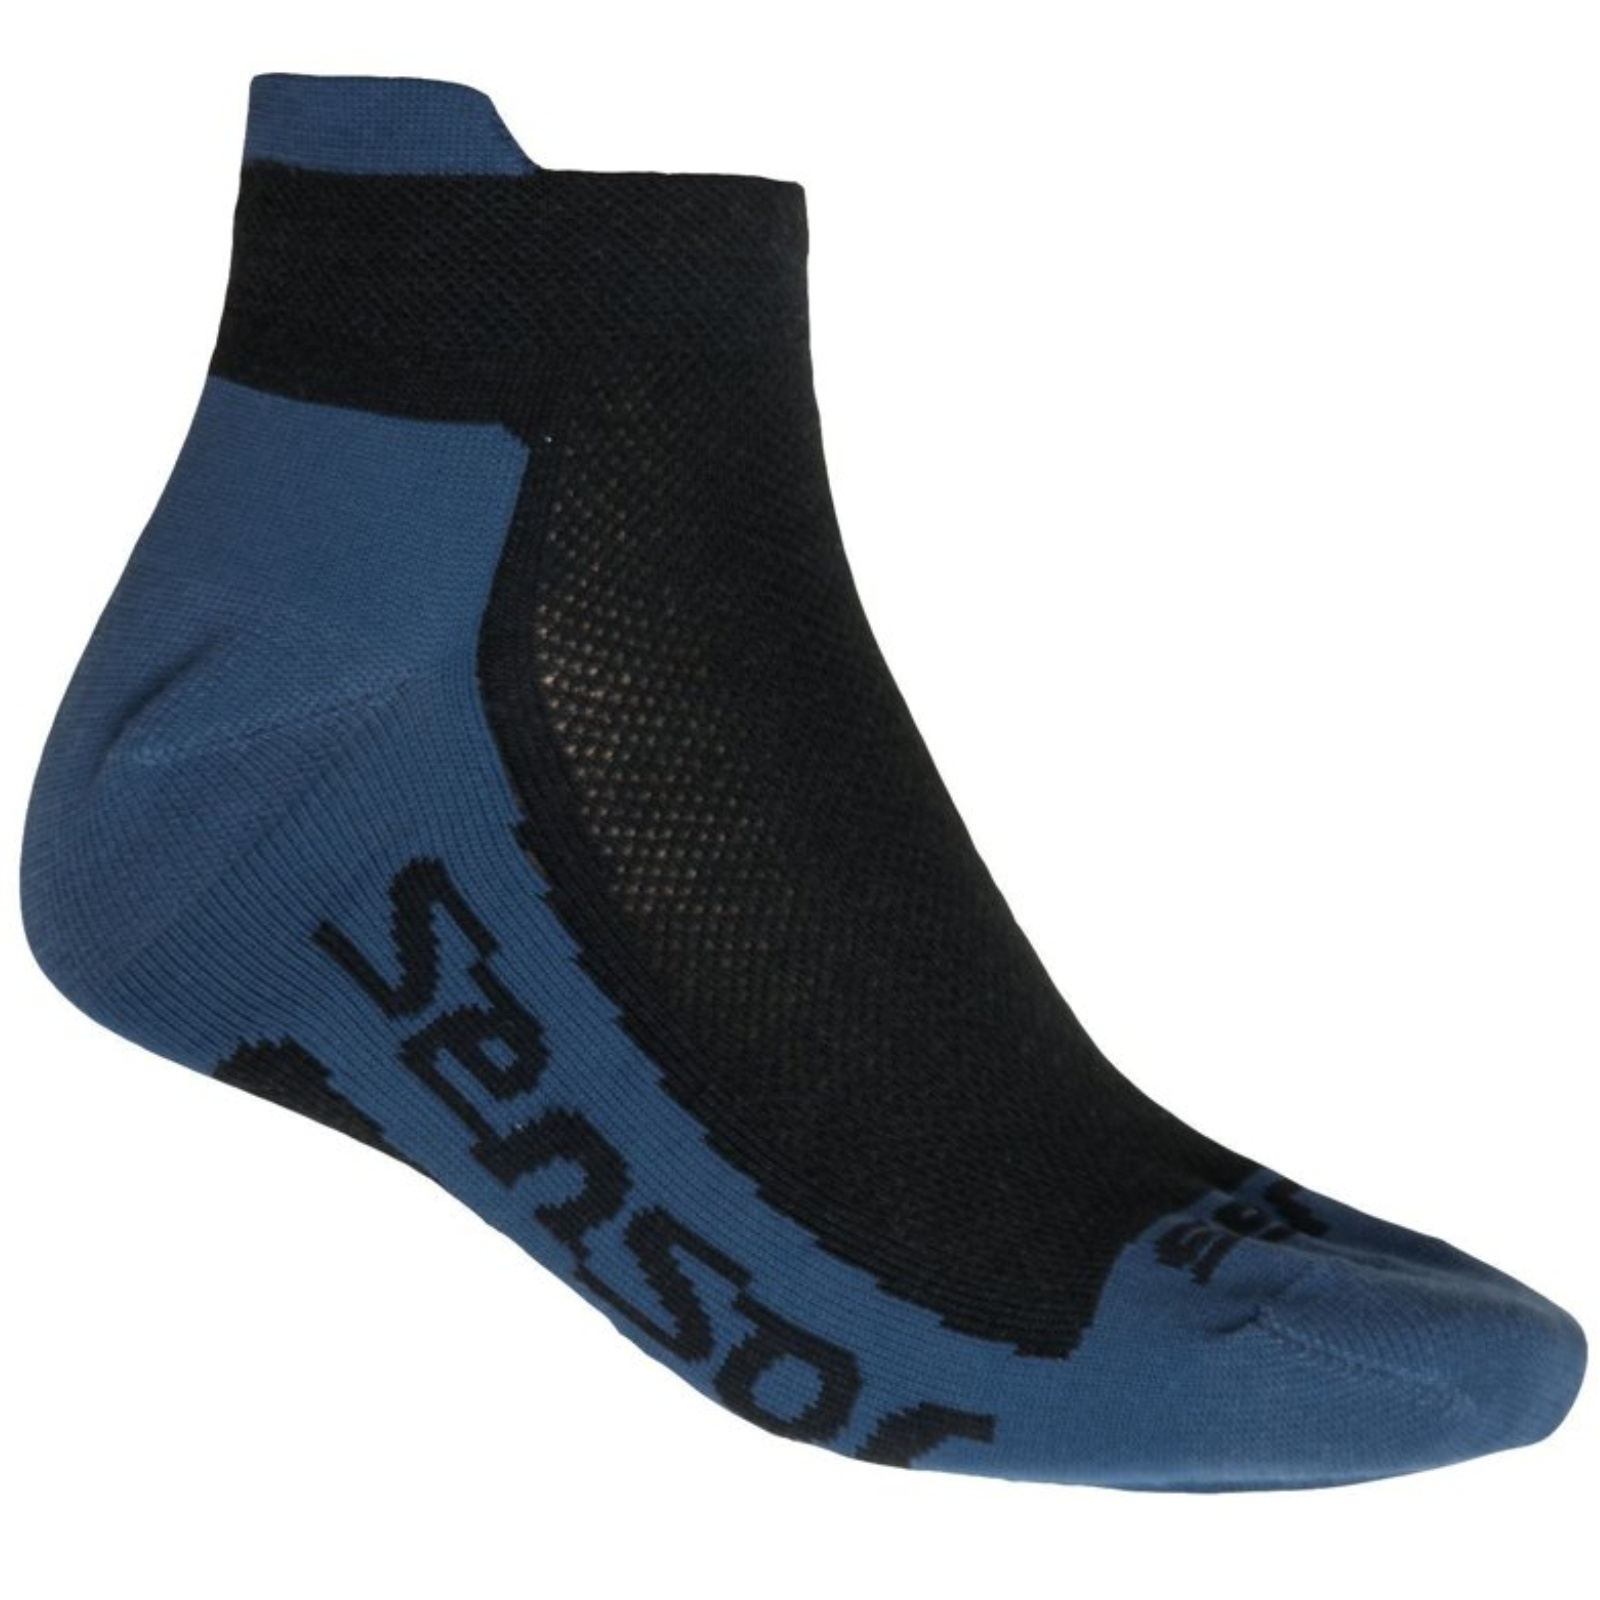 Ponožky SENSOR Coolmax Invisible modré - veľ. 6-8